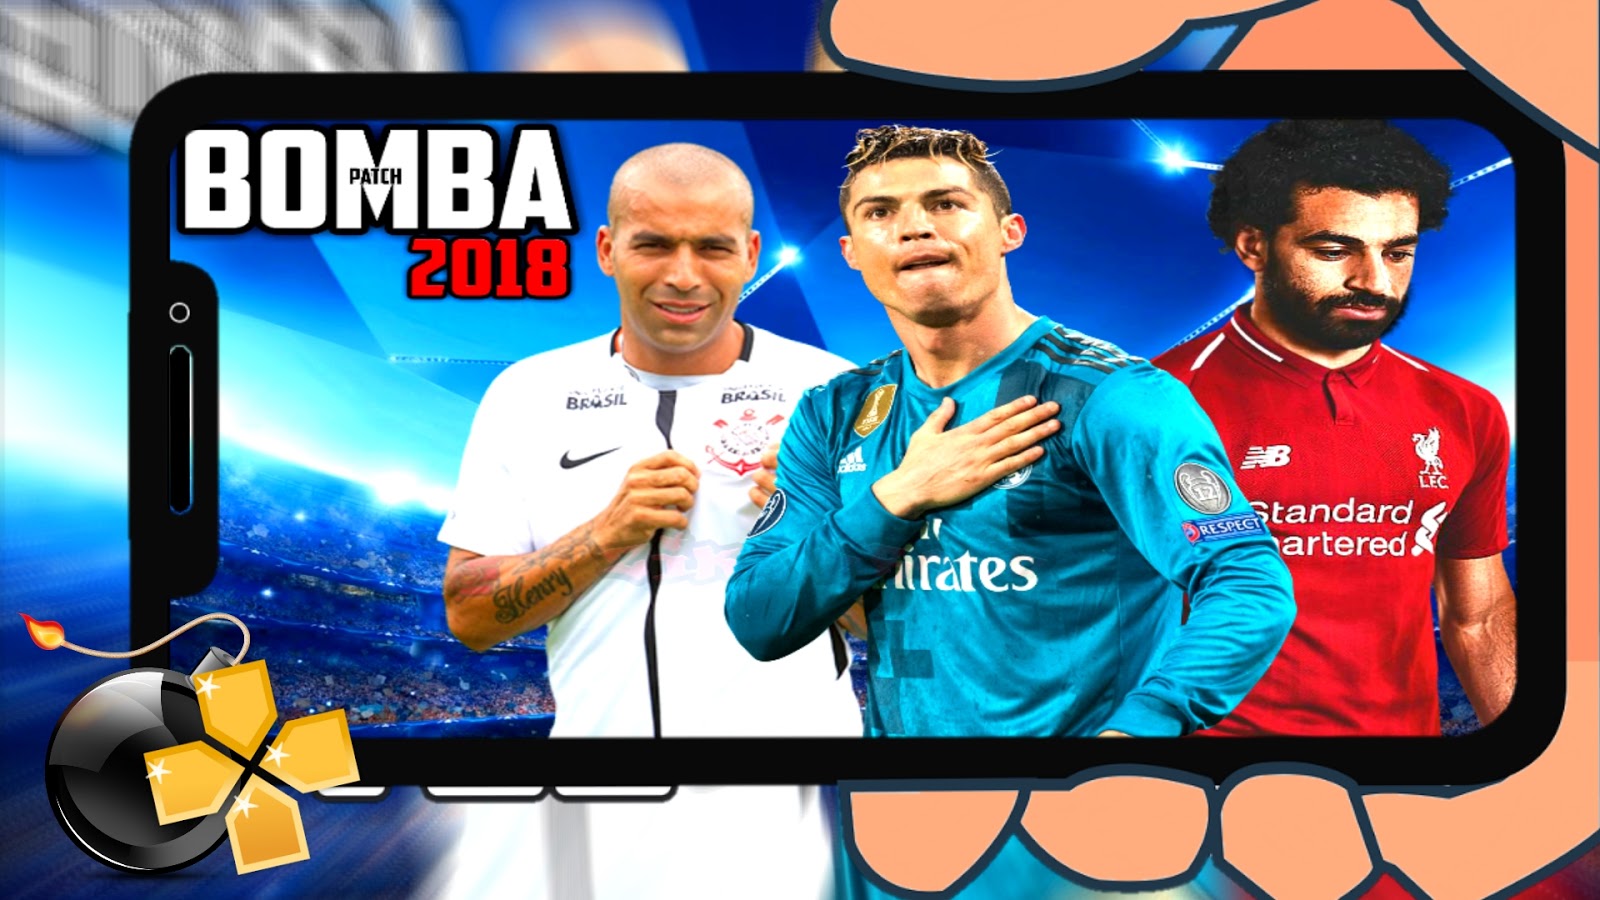 Pro Evolution Soccer 2018 - Bomba Patch Agosto 2017 - Baixar em PTBR